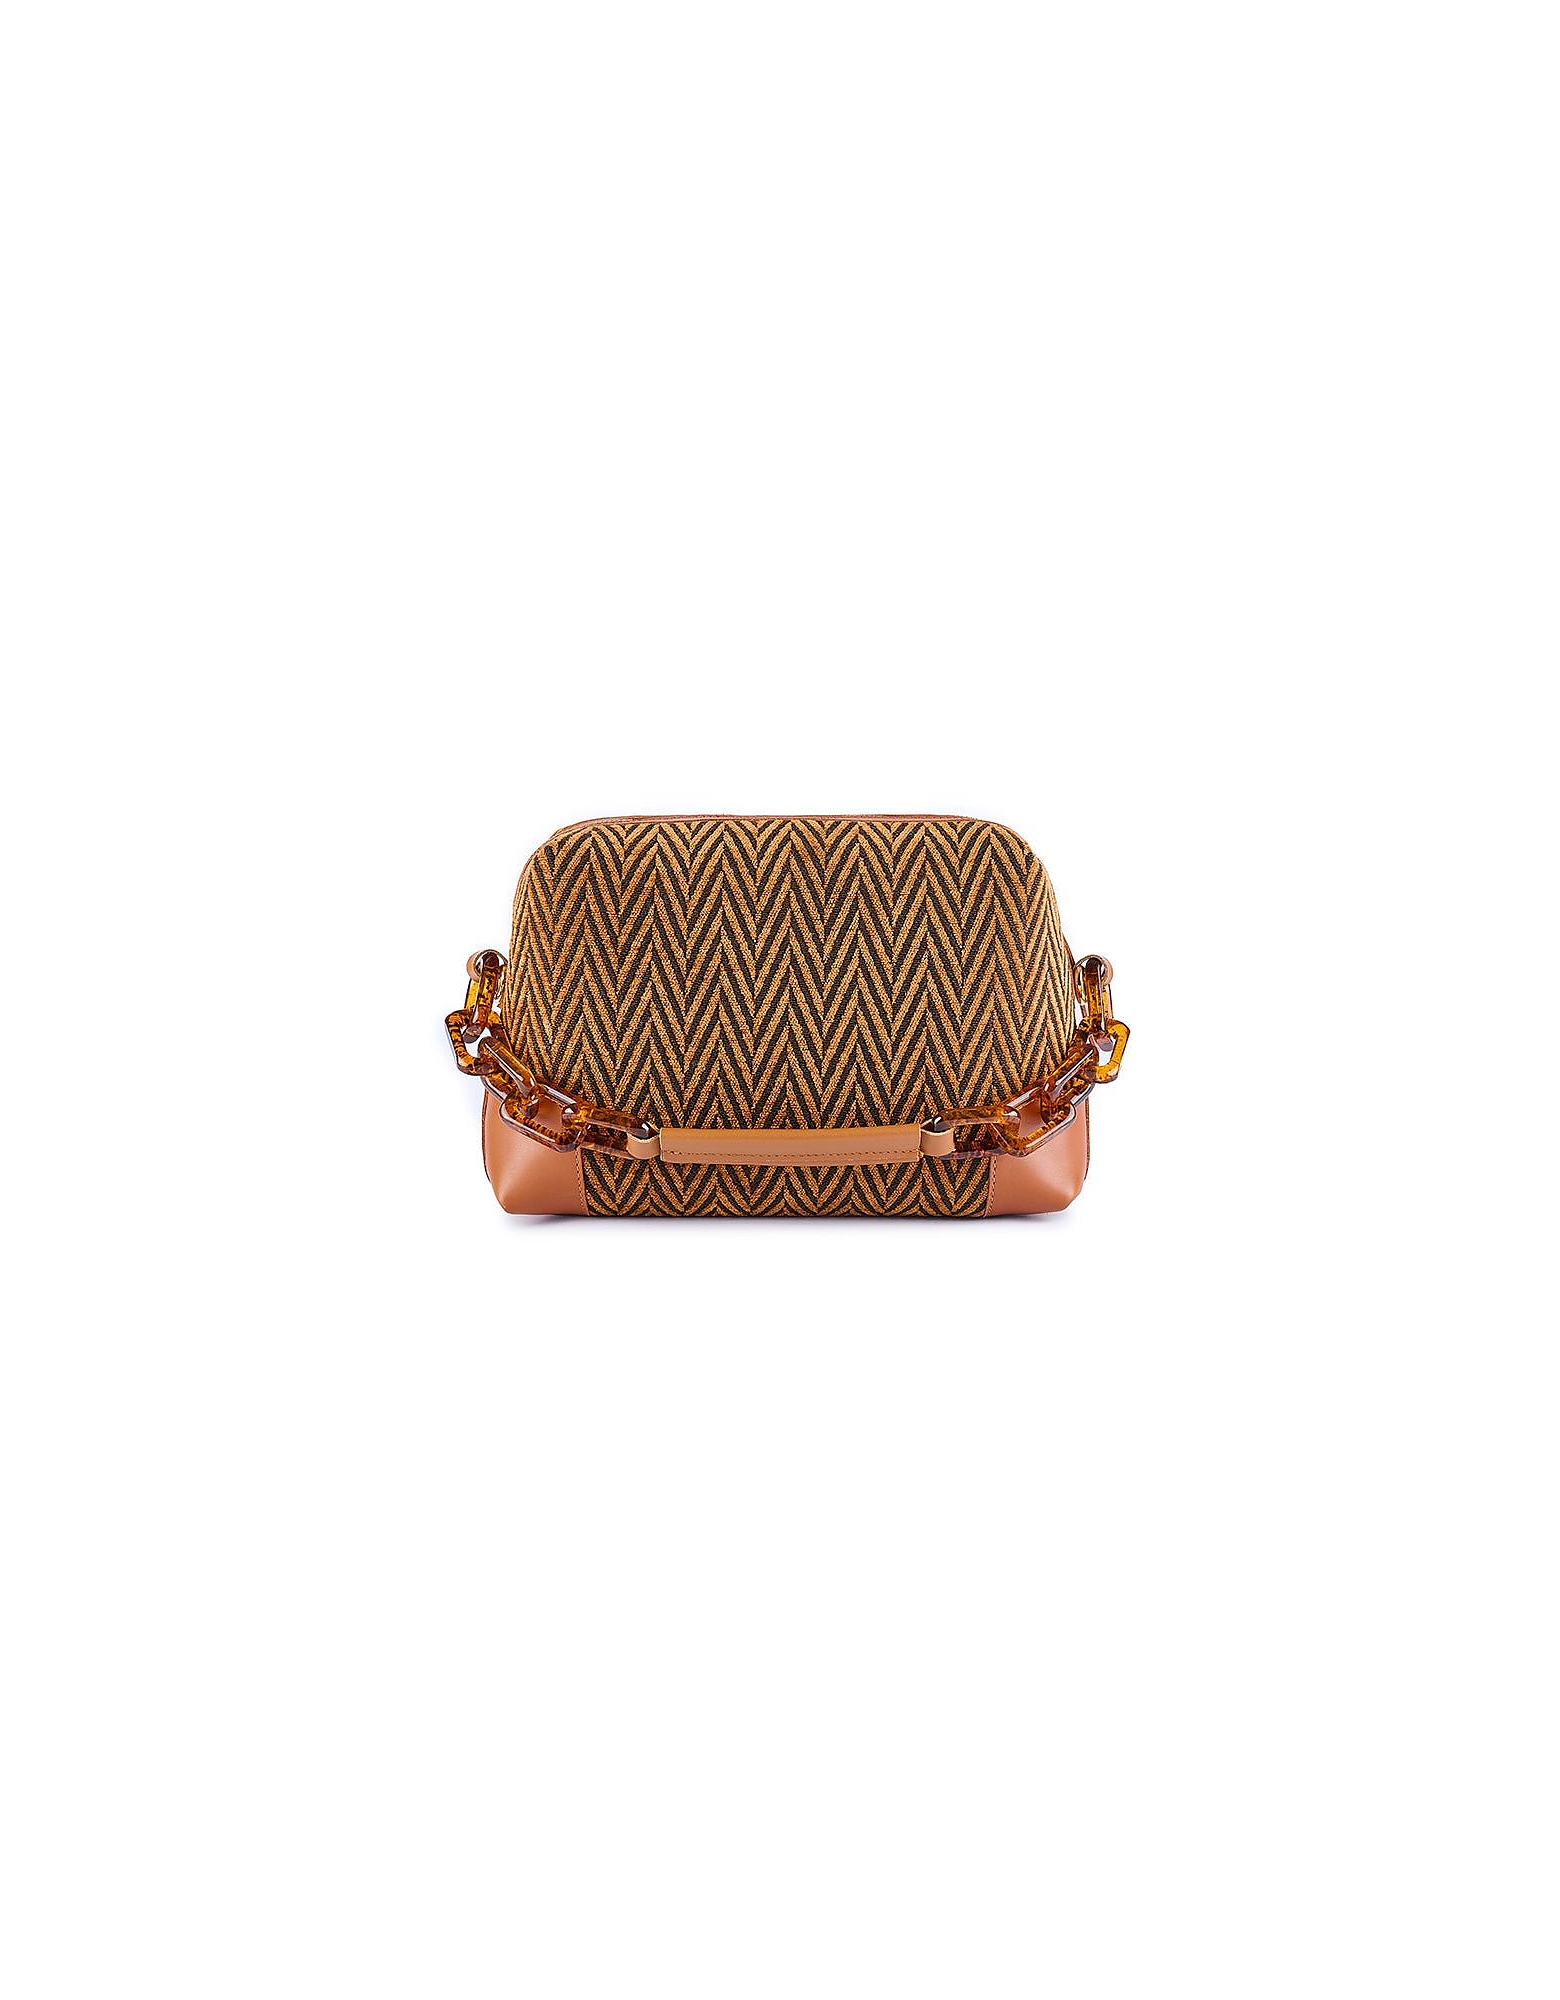 Viamailbag Designer Handbags Stresa Sac - Crossbody Bag In Marron